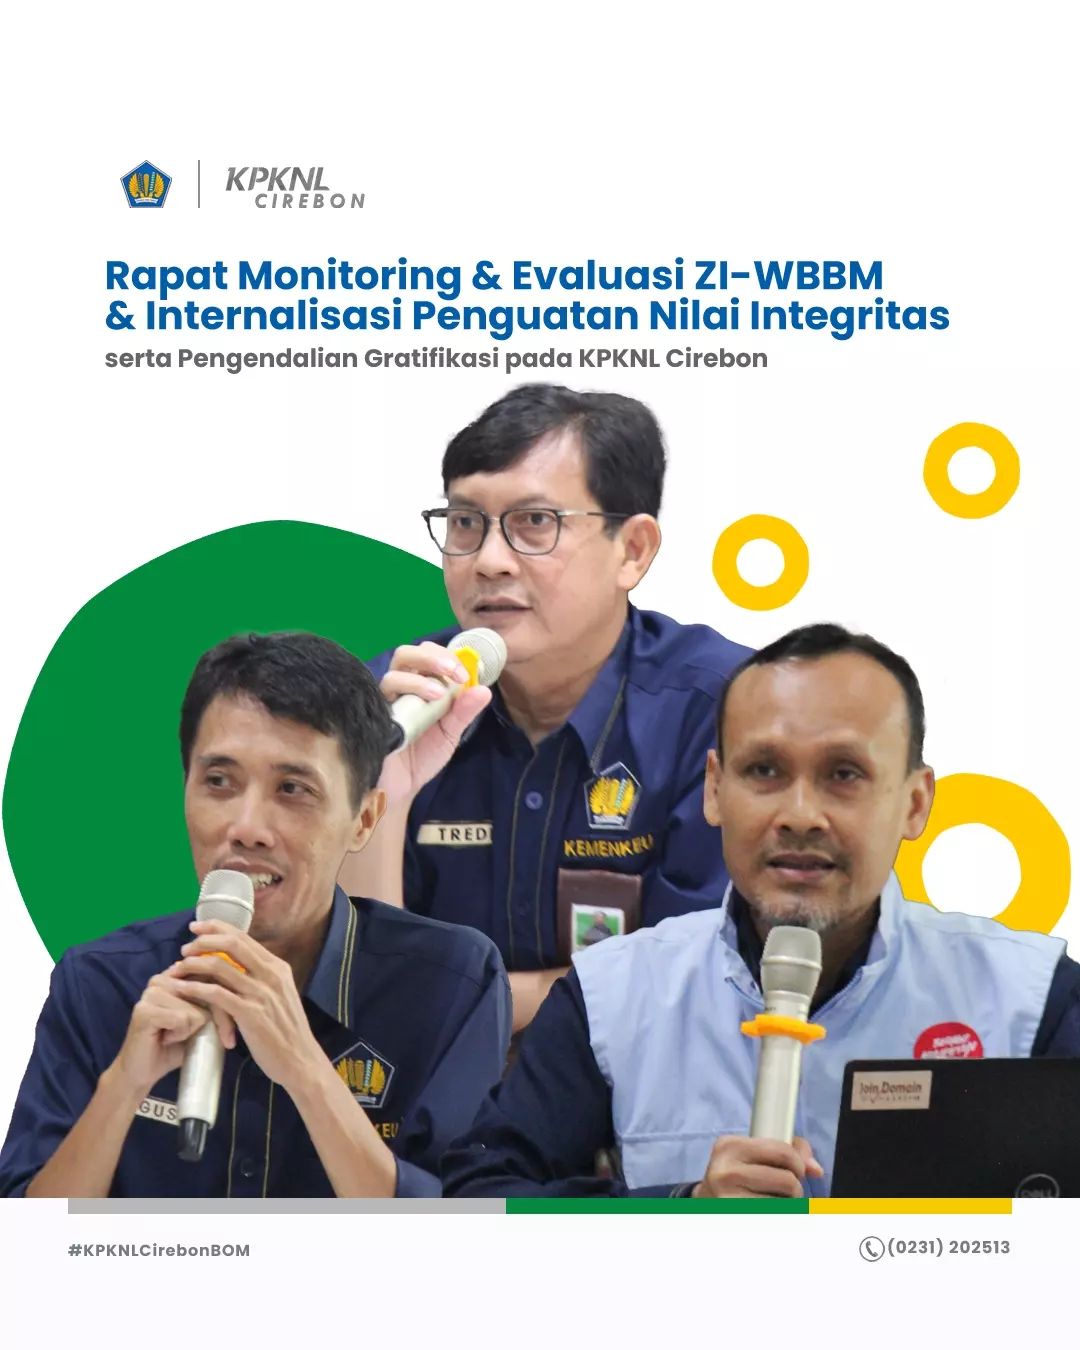 Rapat Monev ZI WBBM dan Internalisasi Penguatan Nilai Integritas dan Pengendalian Gratifikasi KPKNL Cirebon